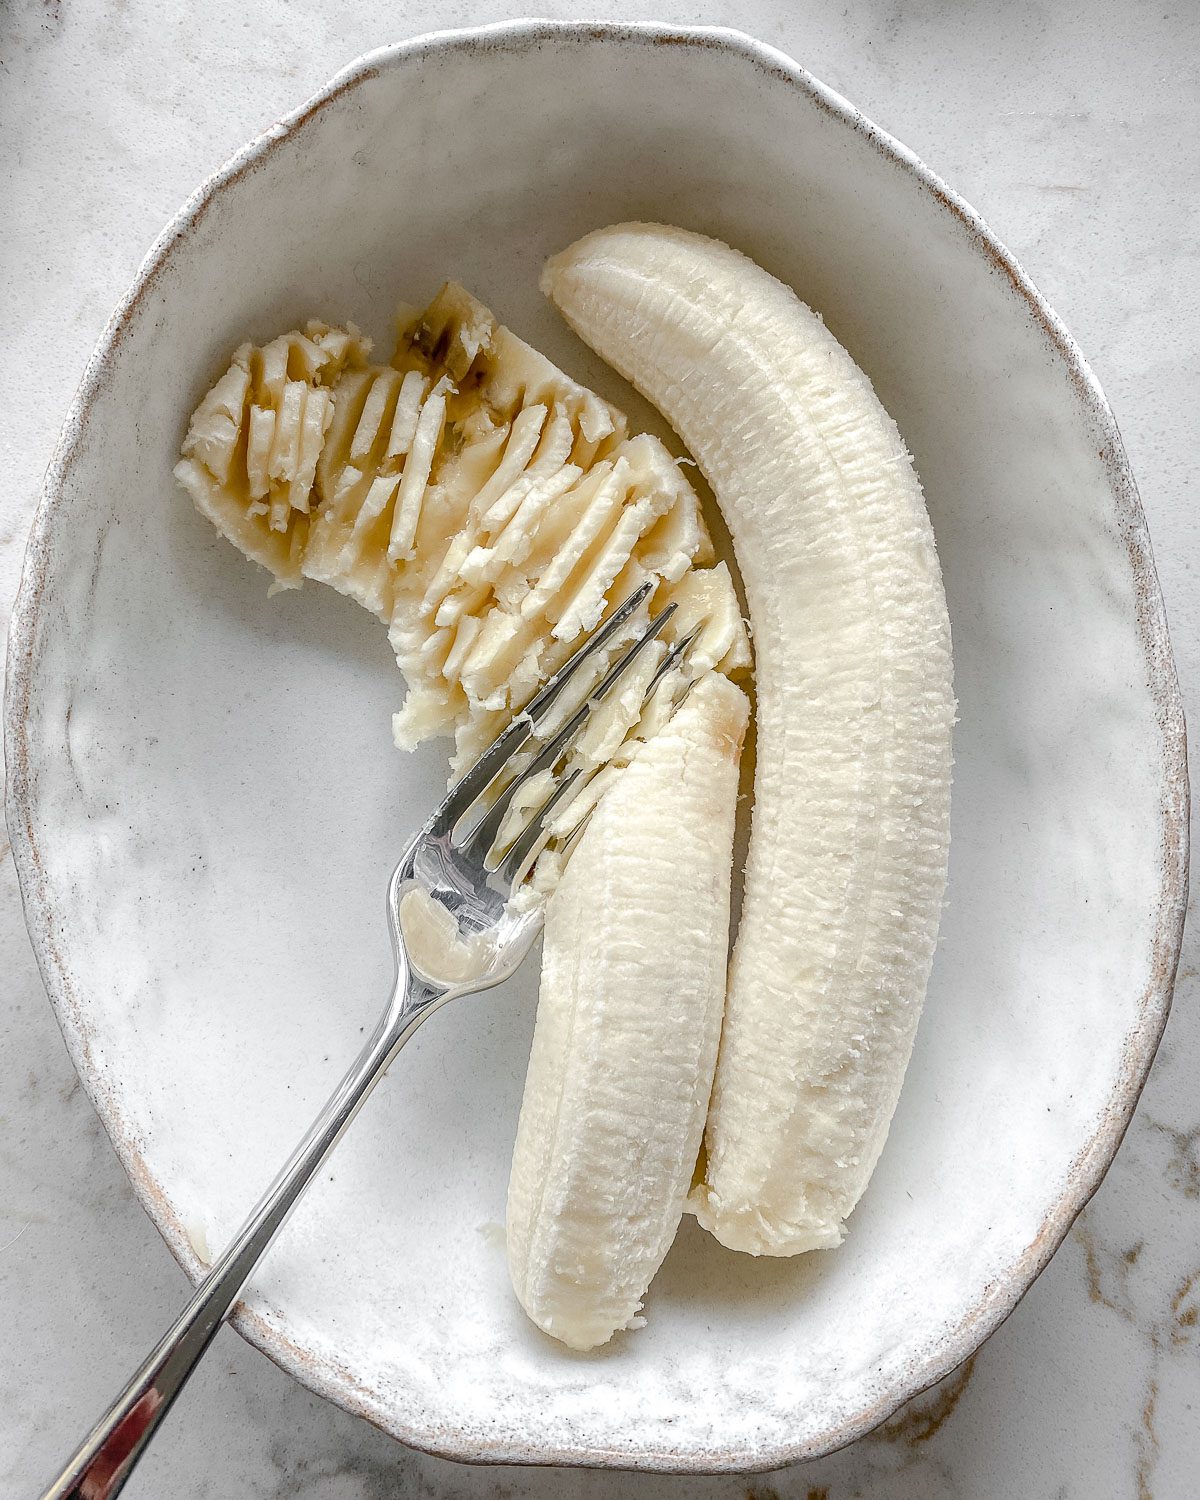 process of mashing banana with a fork